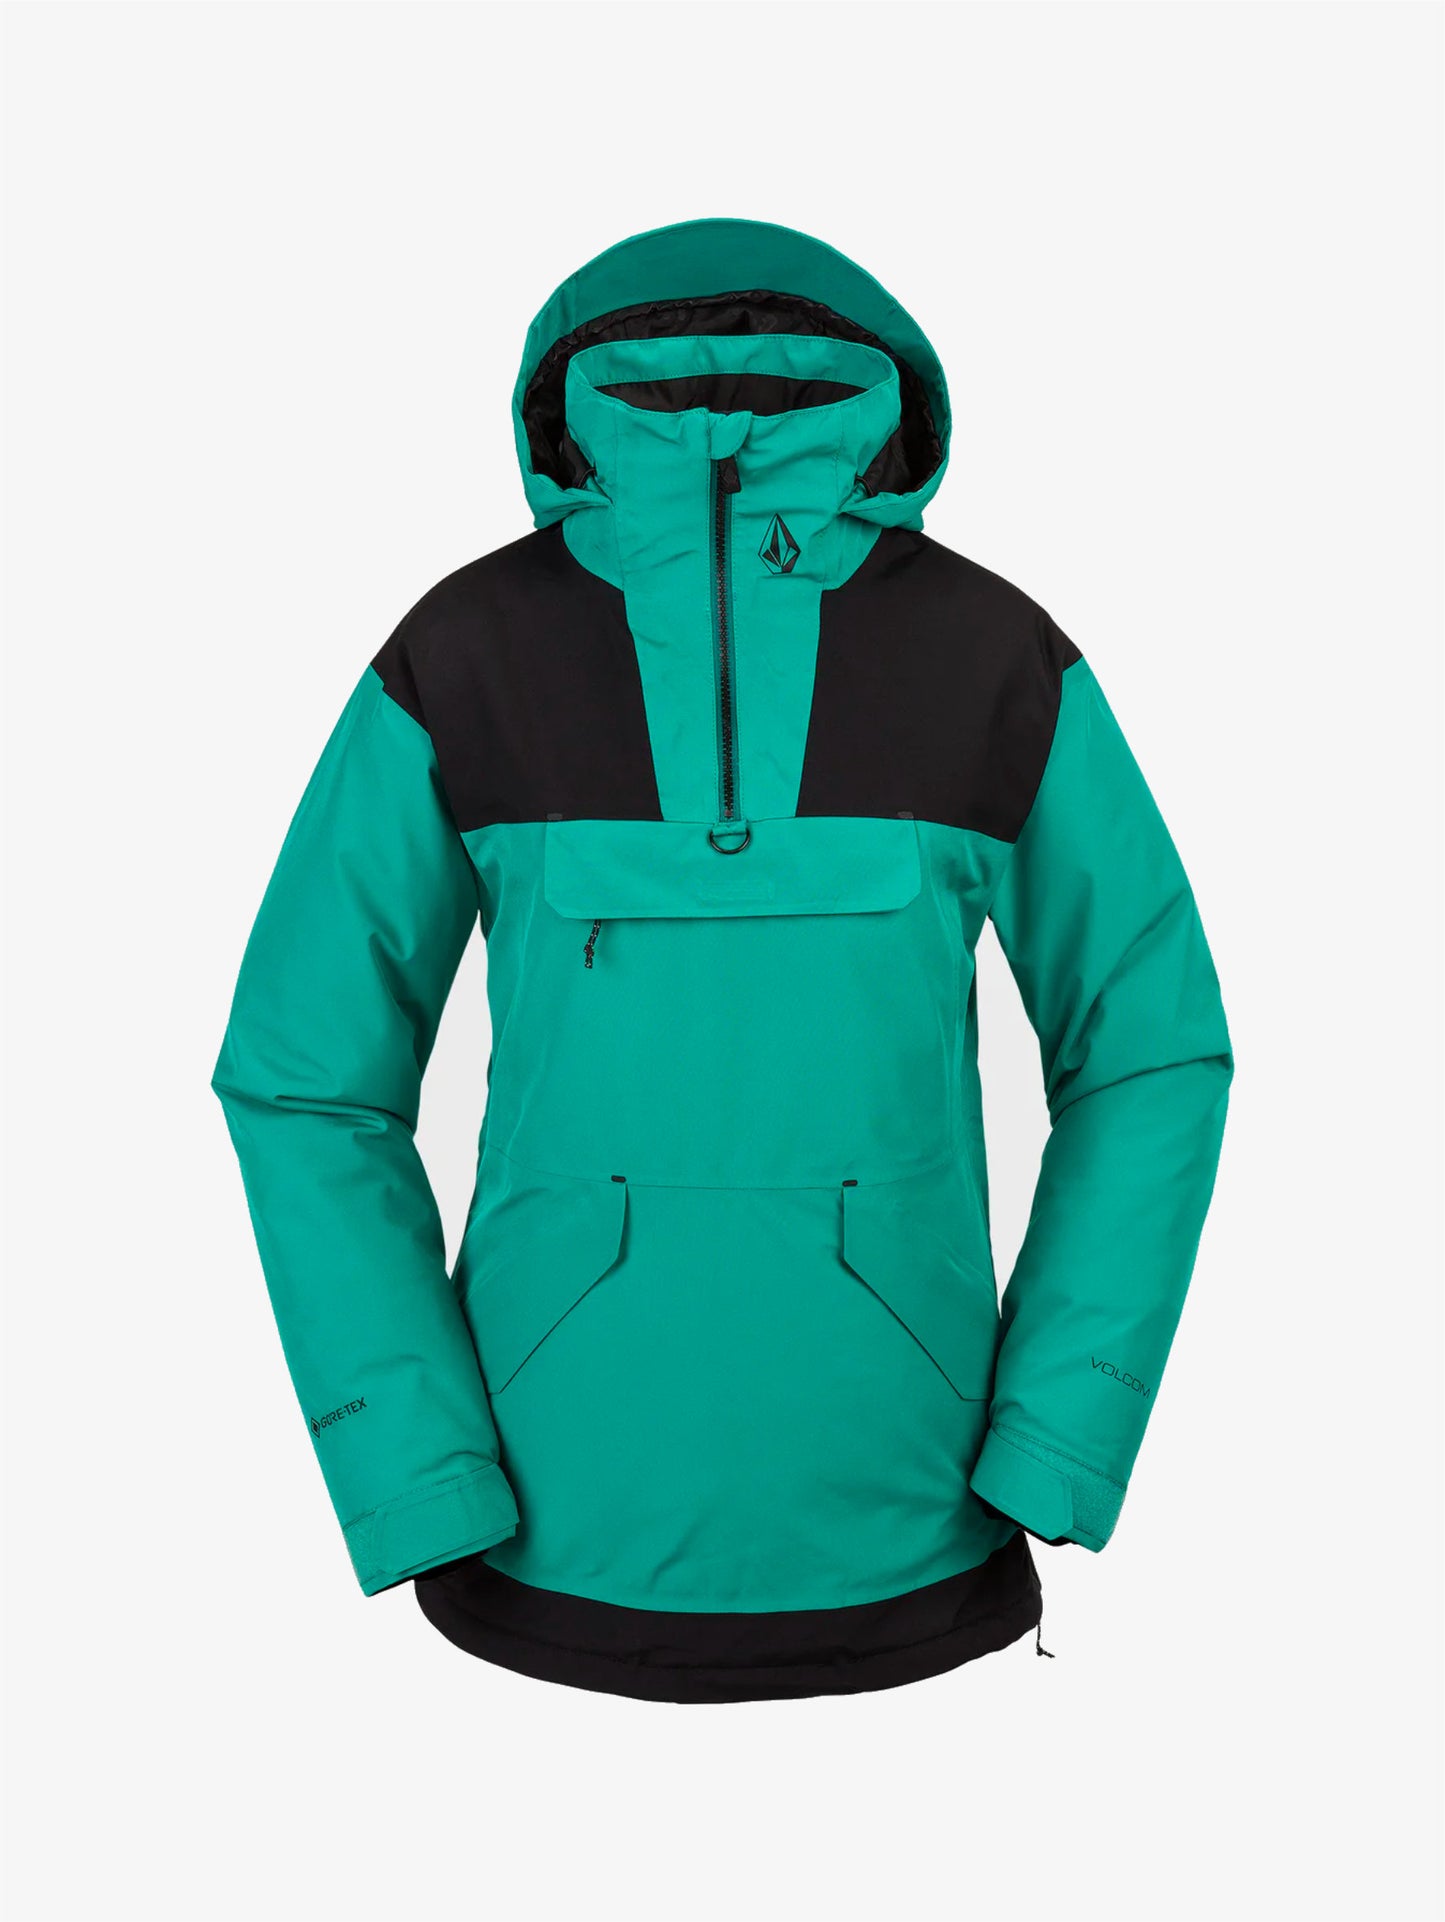 Fern Insulated Gore-Tex snowboard / ski womens' jacket vibrant green